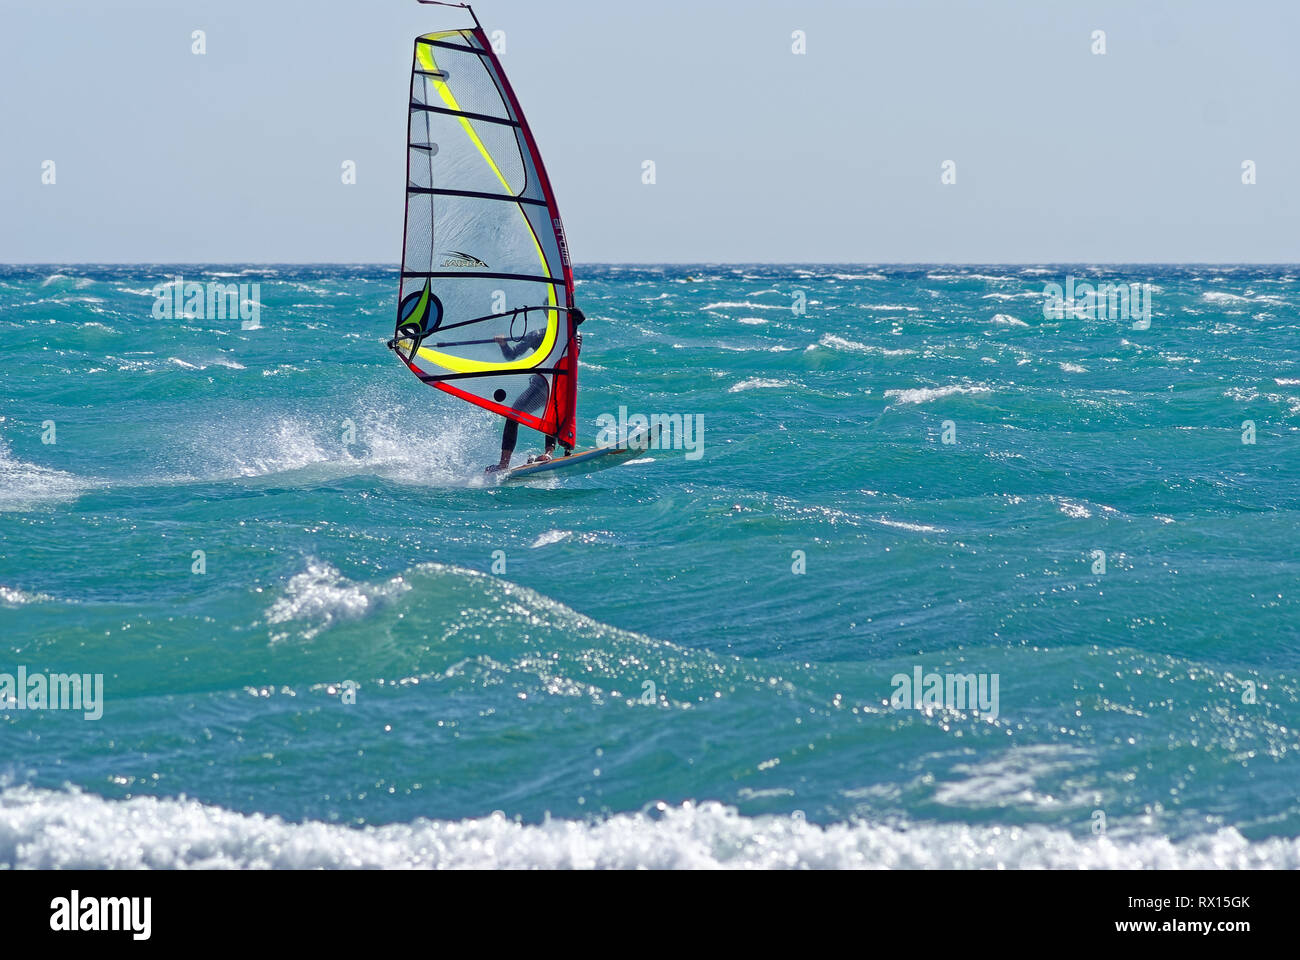 Windsurfer during a mistral windy day in mediterranean sea (St Laurent du Var , France) Stock Photo